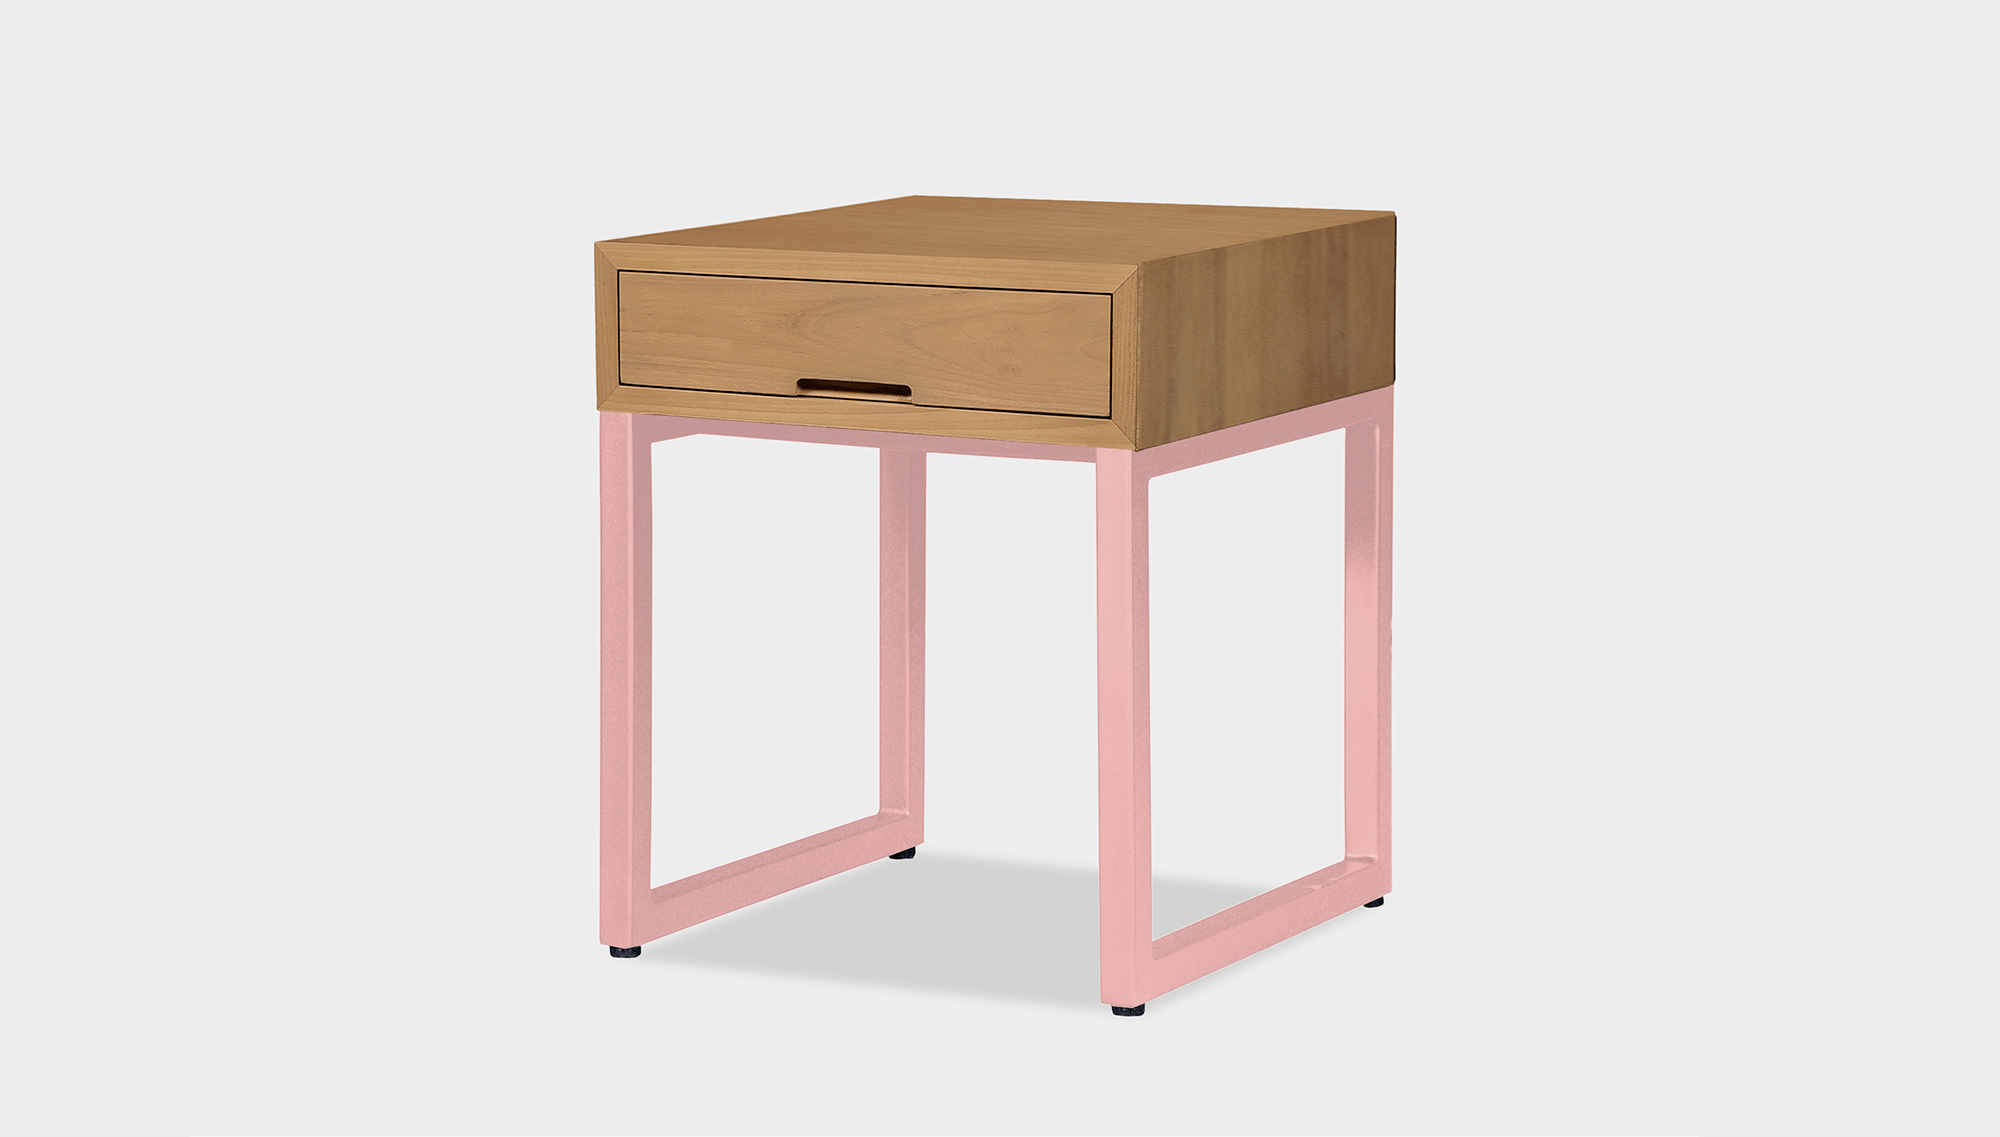 reddie-raw bedside table 45W x 45D x 55H *cm / Wood Teak~Oak / Metal~Pink Suzy Bedside Table High Square